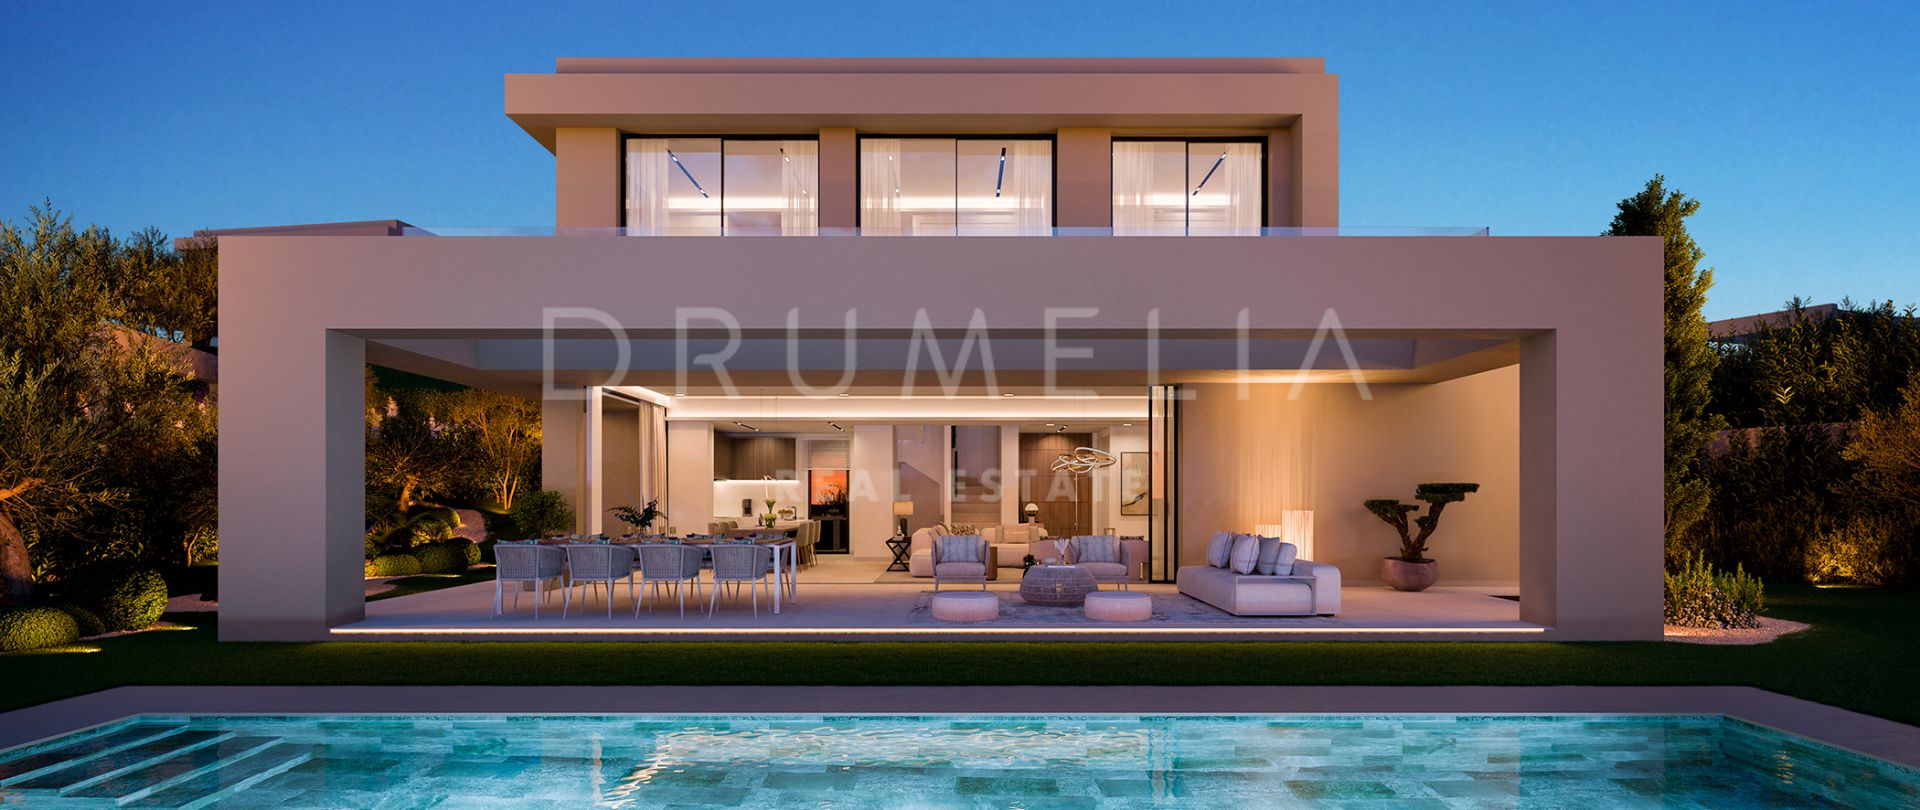 Brand-New Chic, Modern Luxury Villa in Benahavis Area (Project).